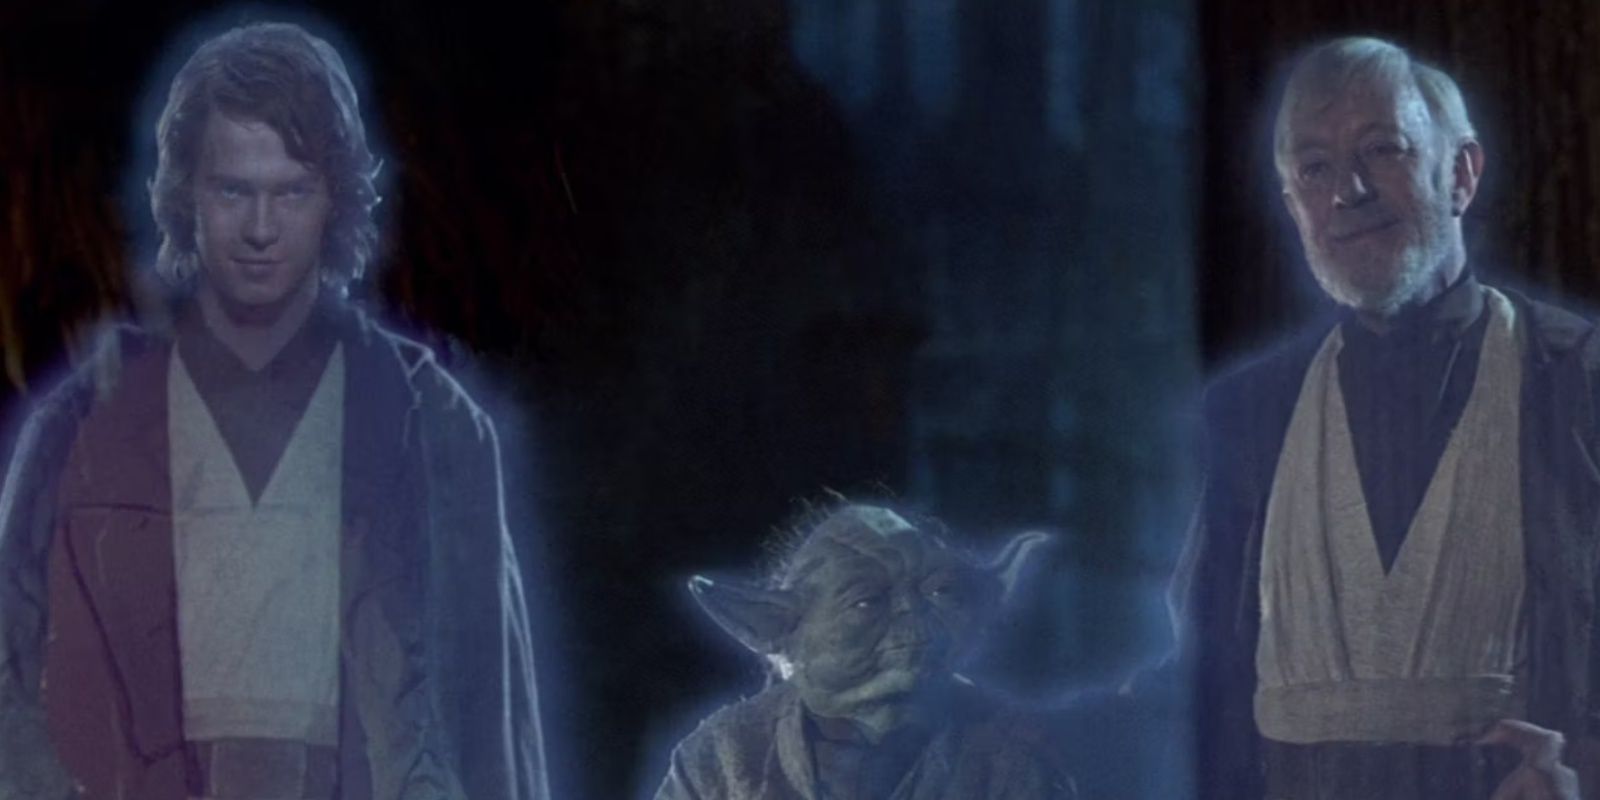 Hayden Christiansen as Anakin Skywalker. Frank Oz as Yoda. Alec Guiness as Obi-Wan Kenobi.